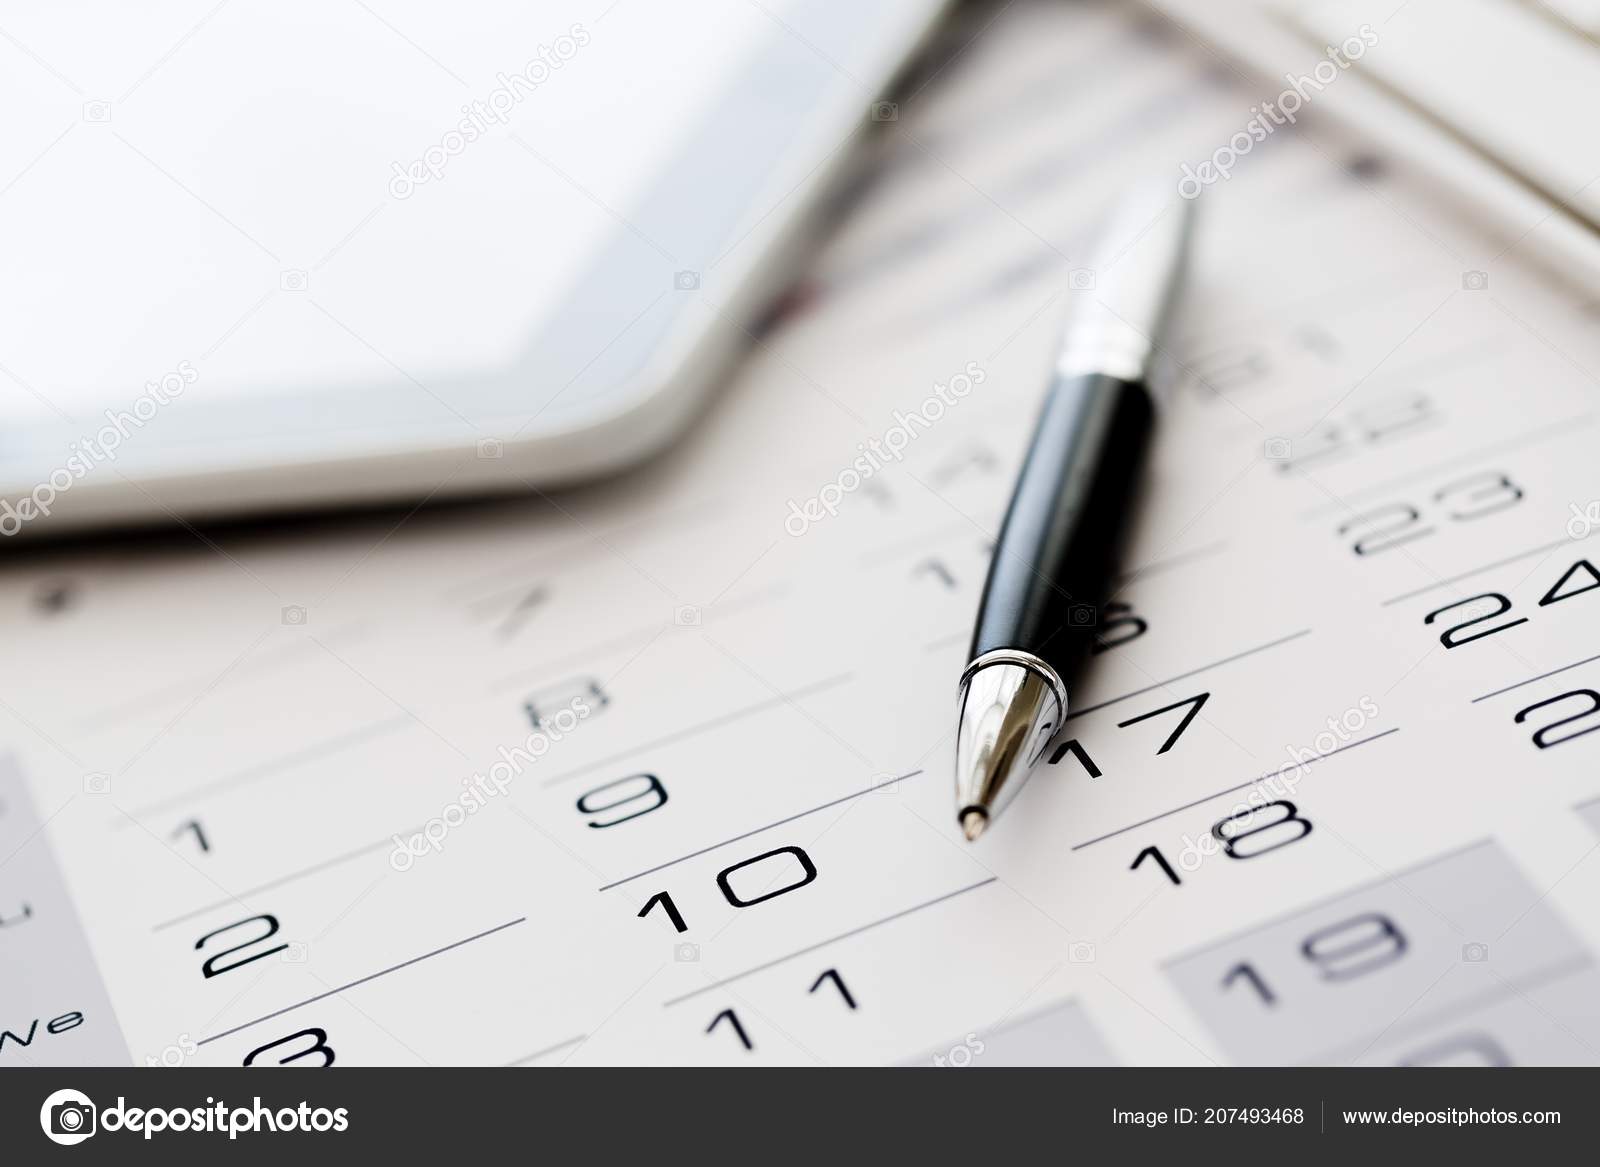 https://st4.depositphotos.com/4431055/20749/i/1600/depositphotos_207493468-stock-photo-business-calendar-pen-table.jpg